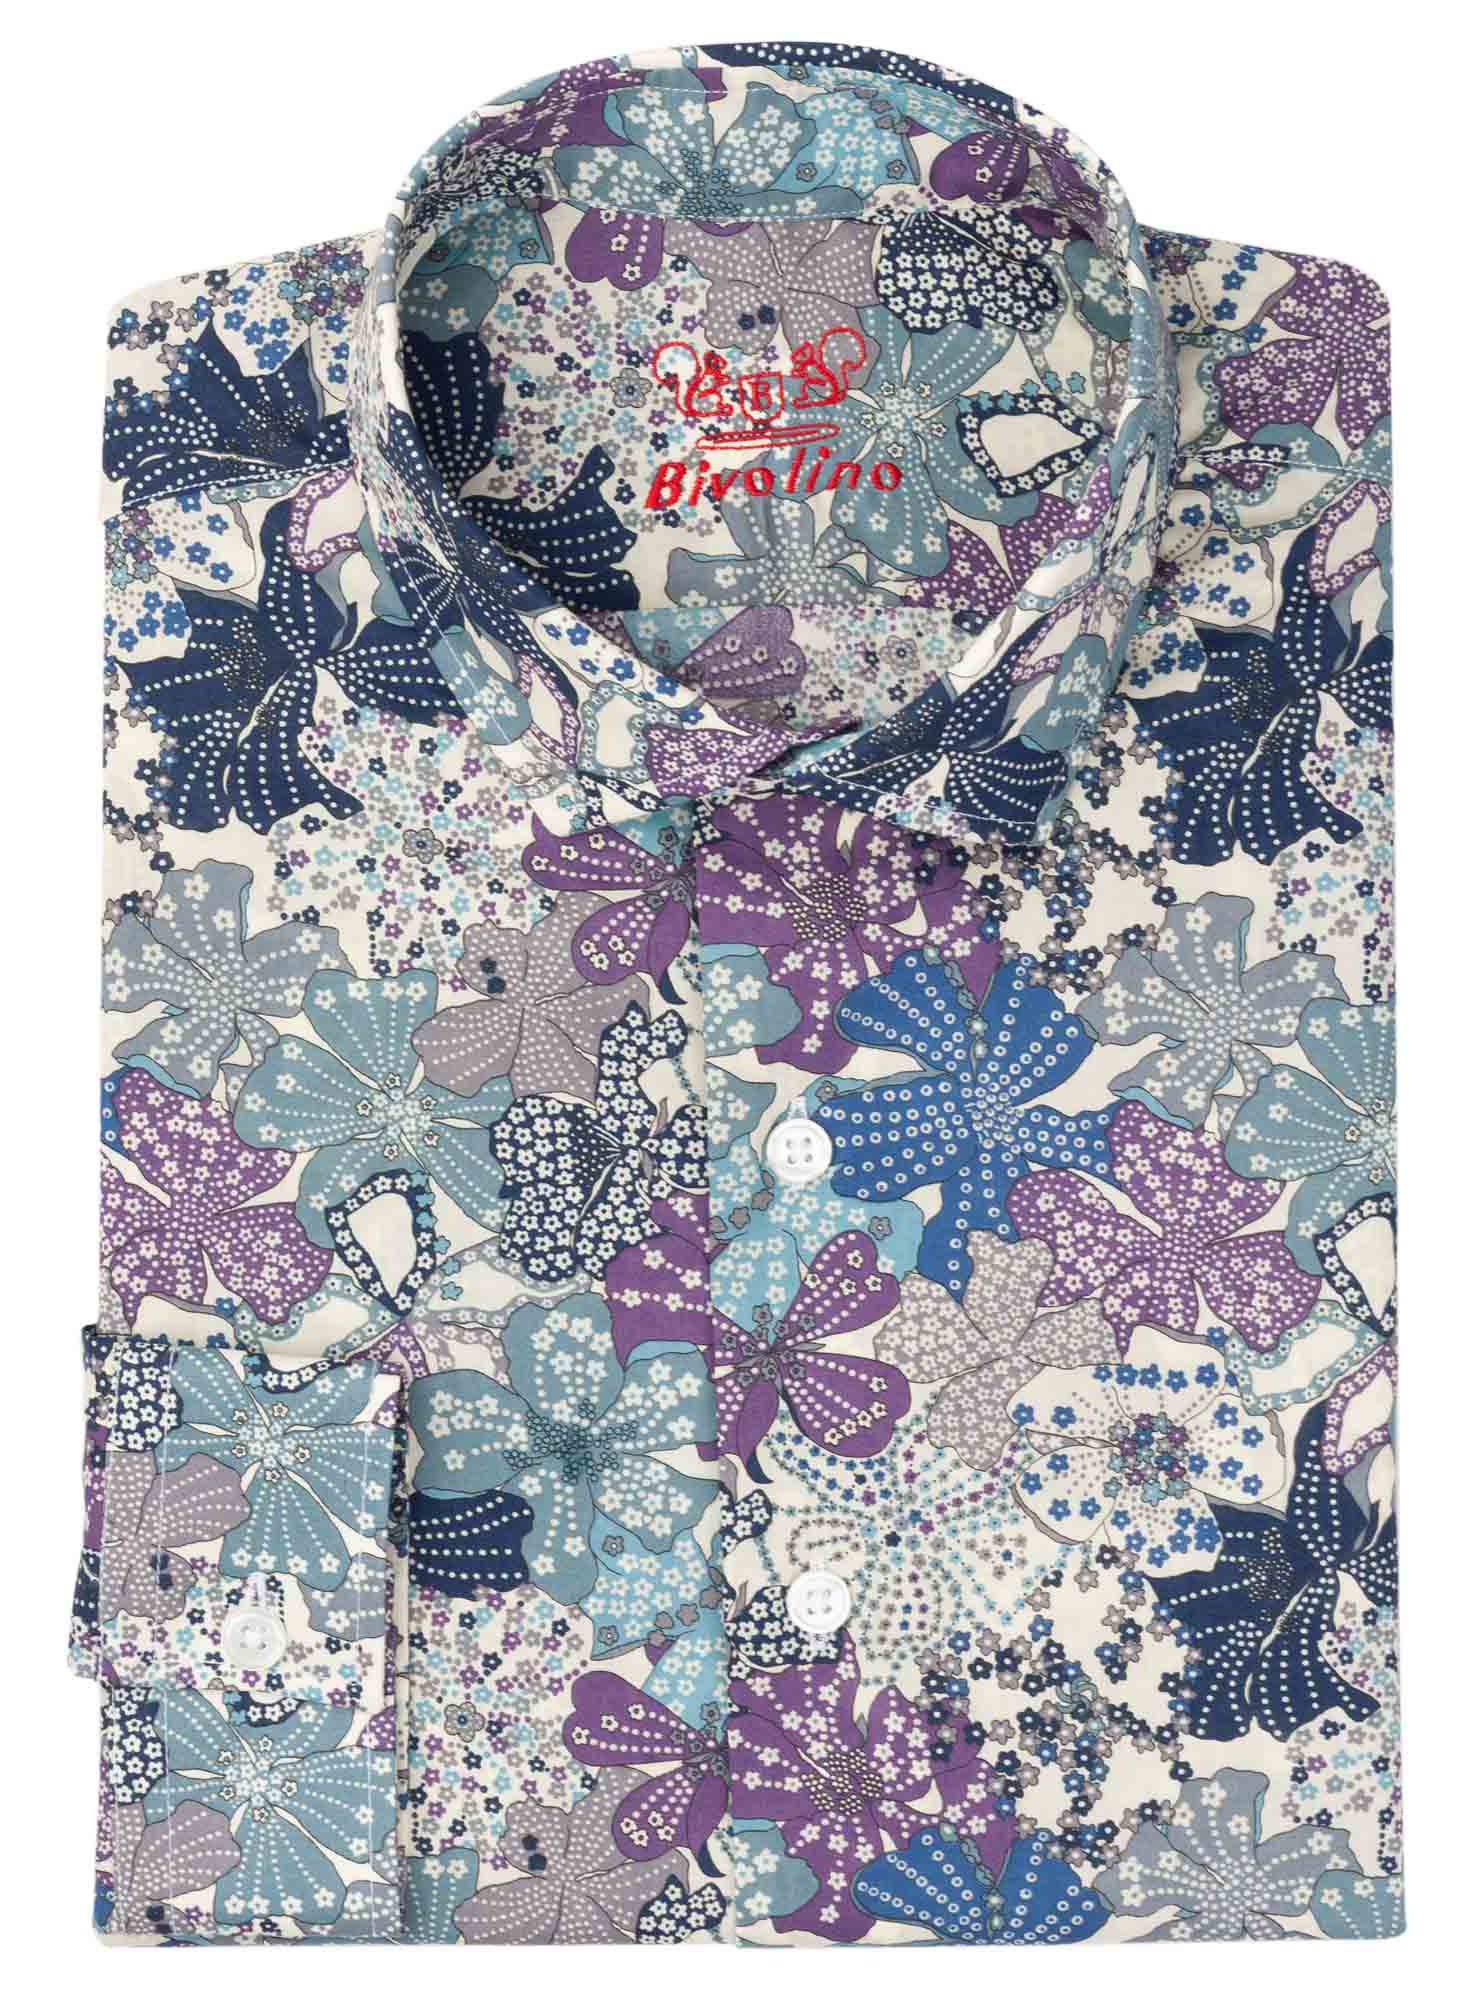 LIBERTINO - chemise homme coton fleurs-cachemire - LIBERTY 7